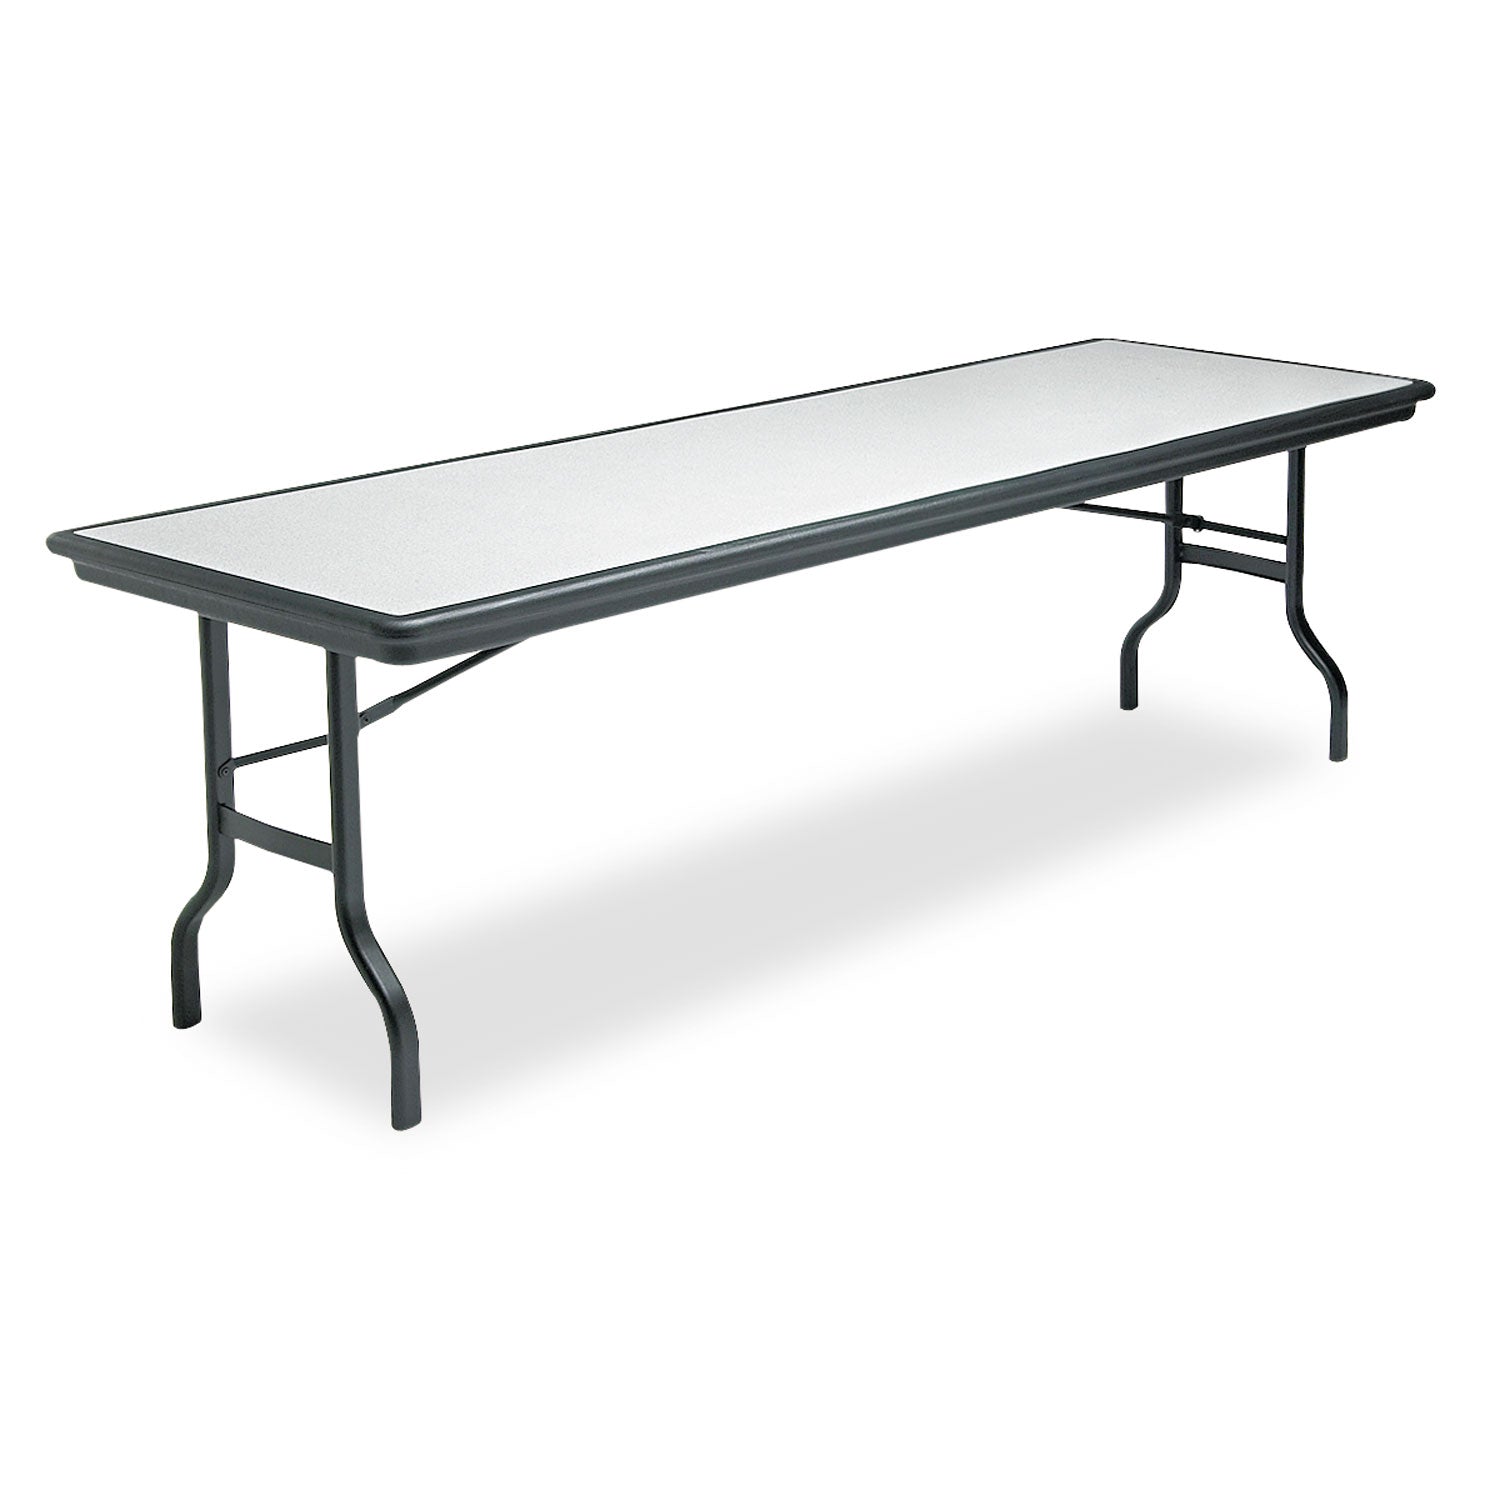 IndestrucTable Ultimate Folding Table, Rectangular, 96" x 30" x 29", Granite/Black - 